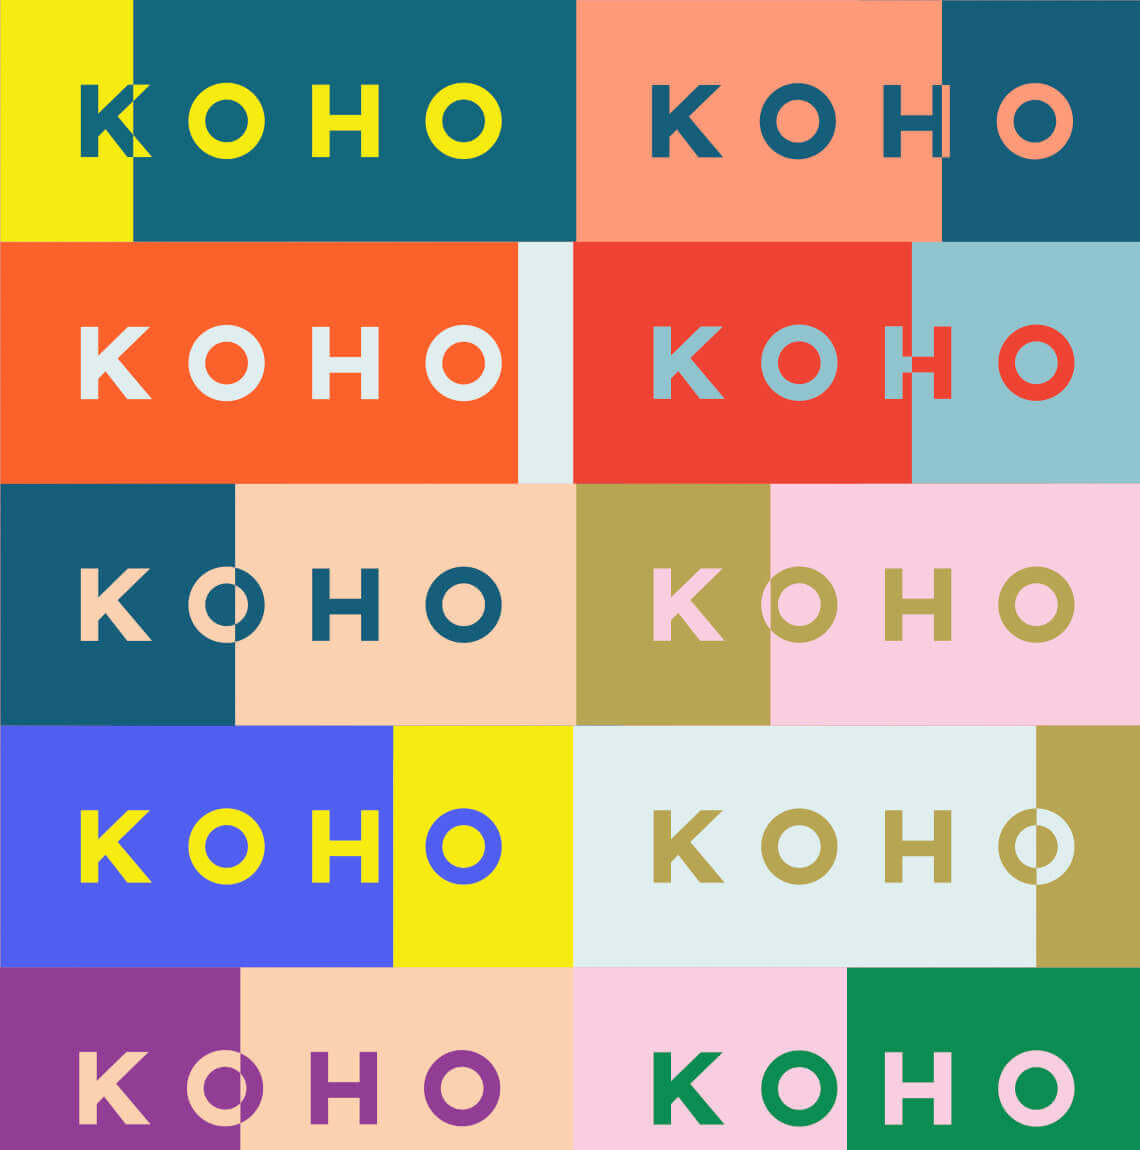 koho-imagessmall-02